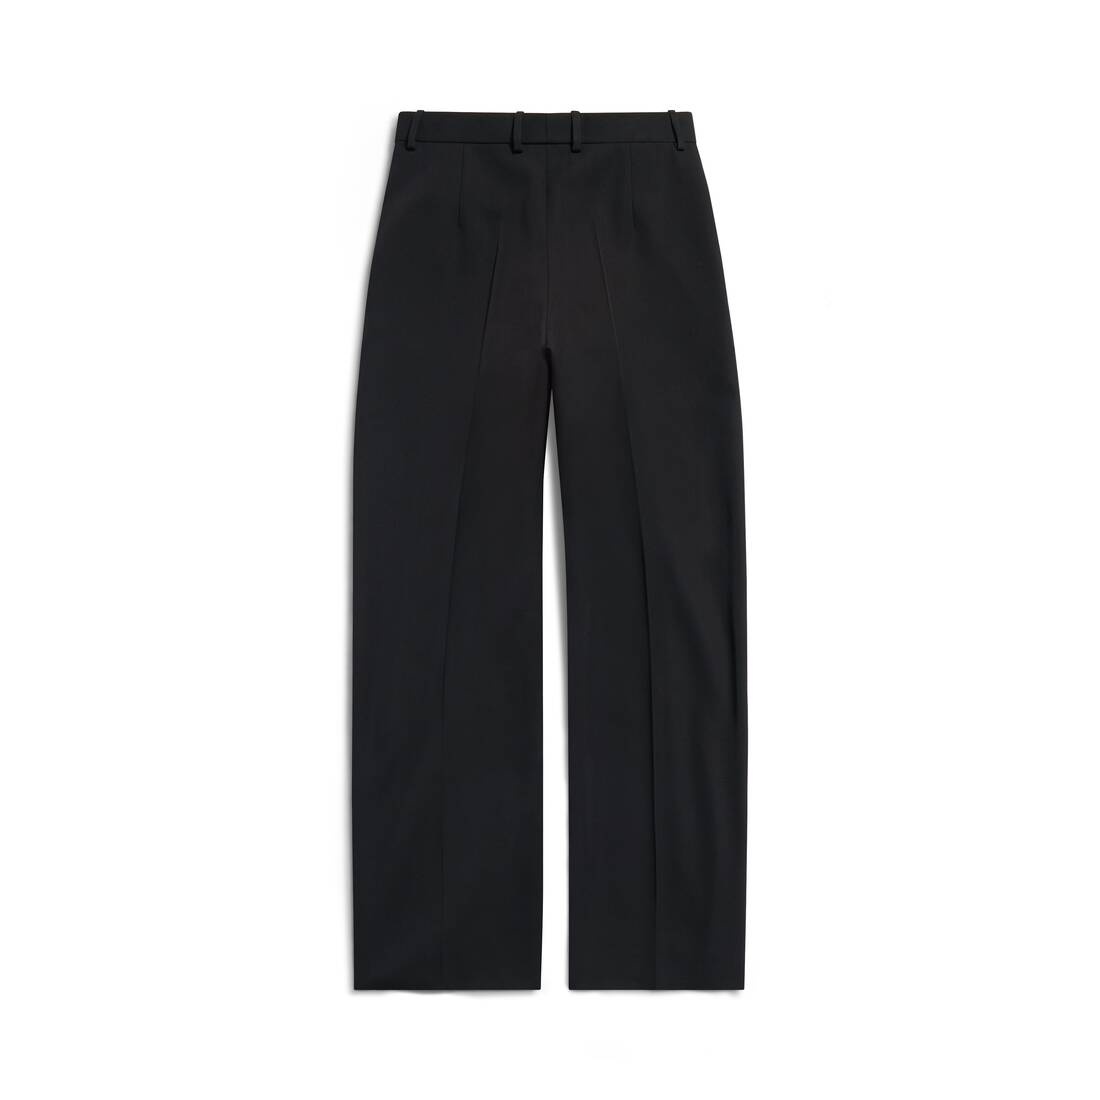 Women's Baggy Tailored Pants in Black - 2